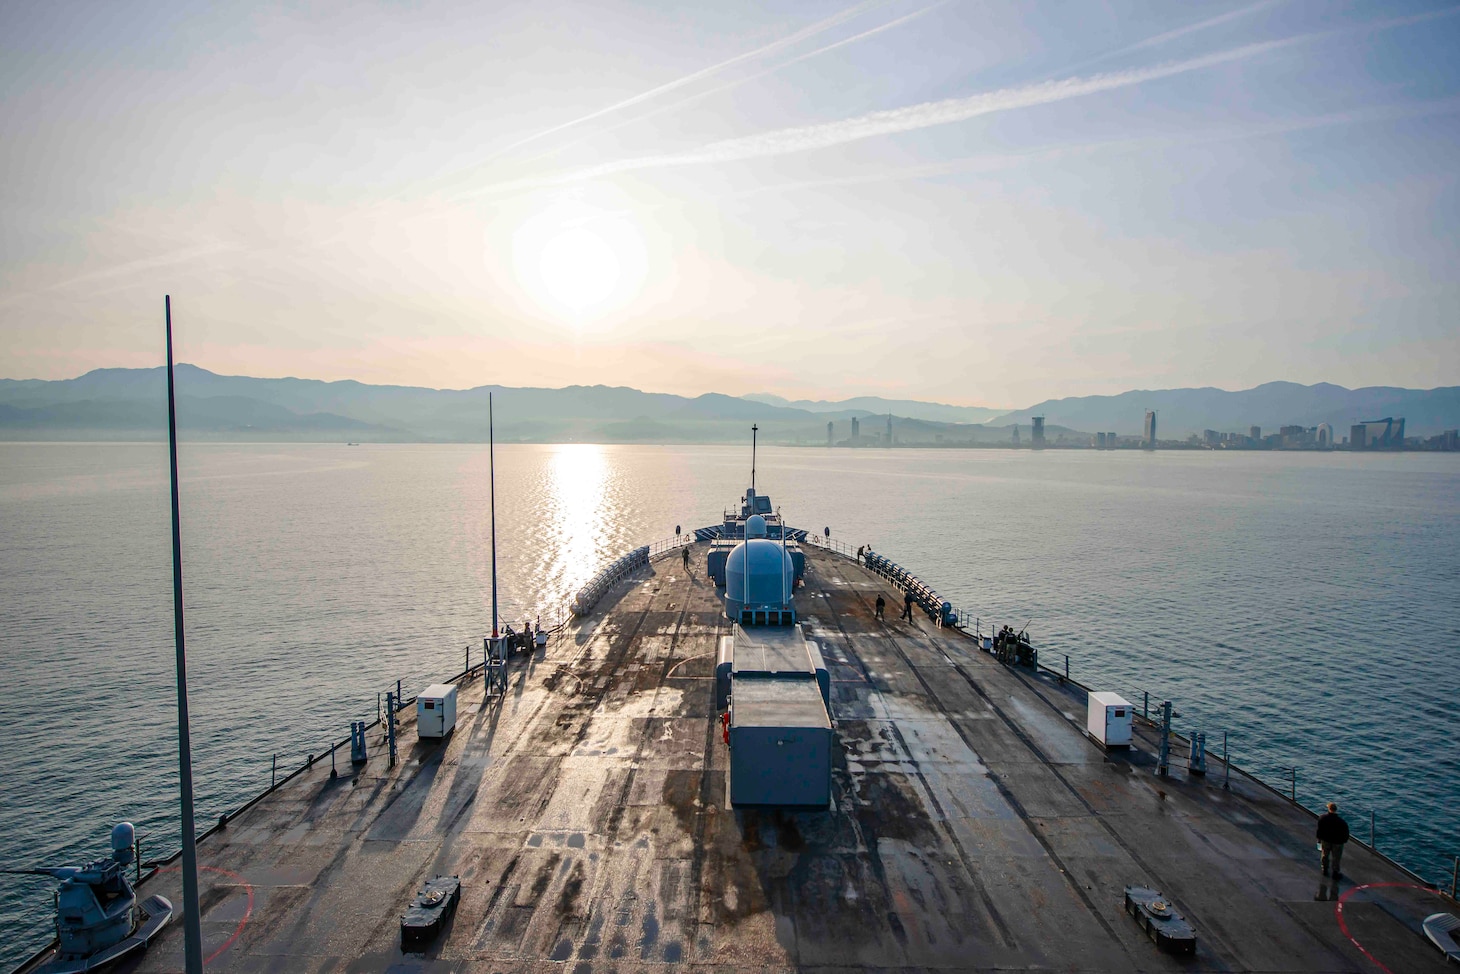 The Blue Ridge-class command and control ship USS Mount Whitney (LCC 20) prepares to enter the harbor in Batumi, Georgia.